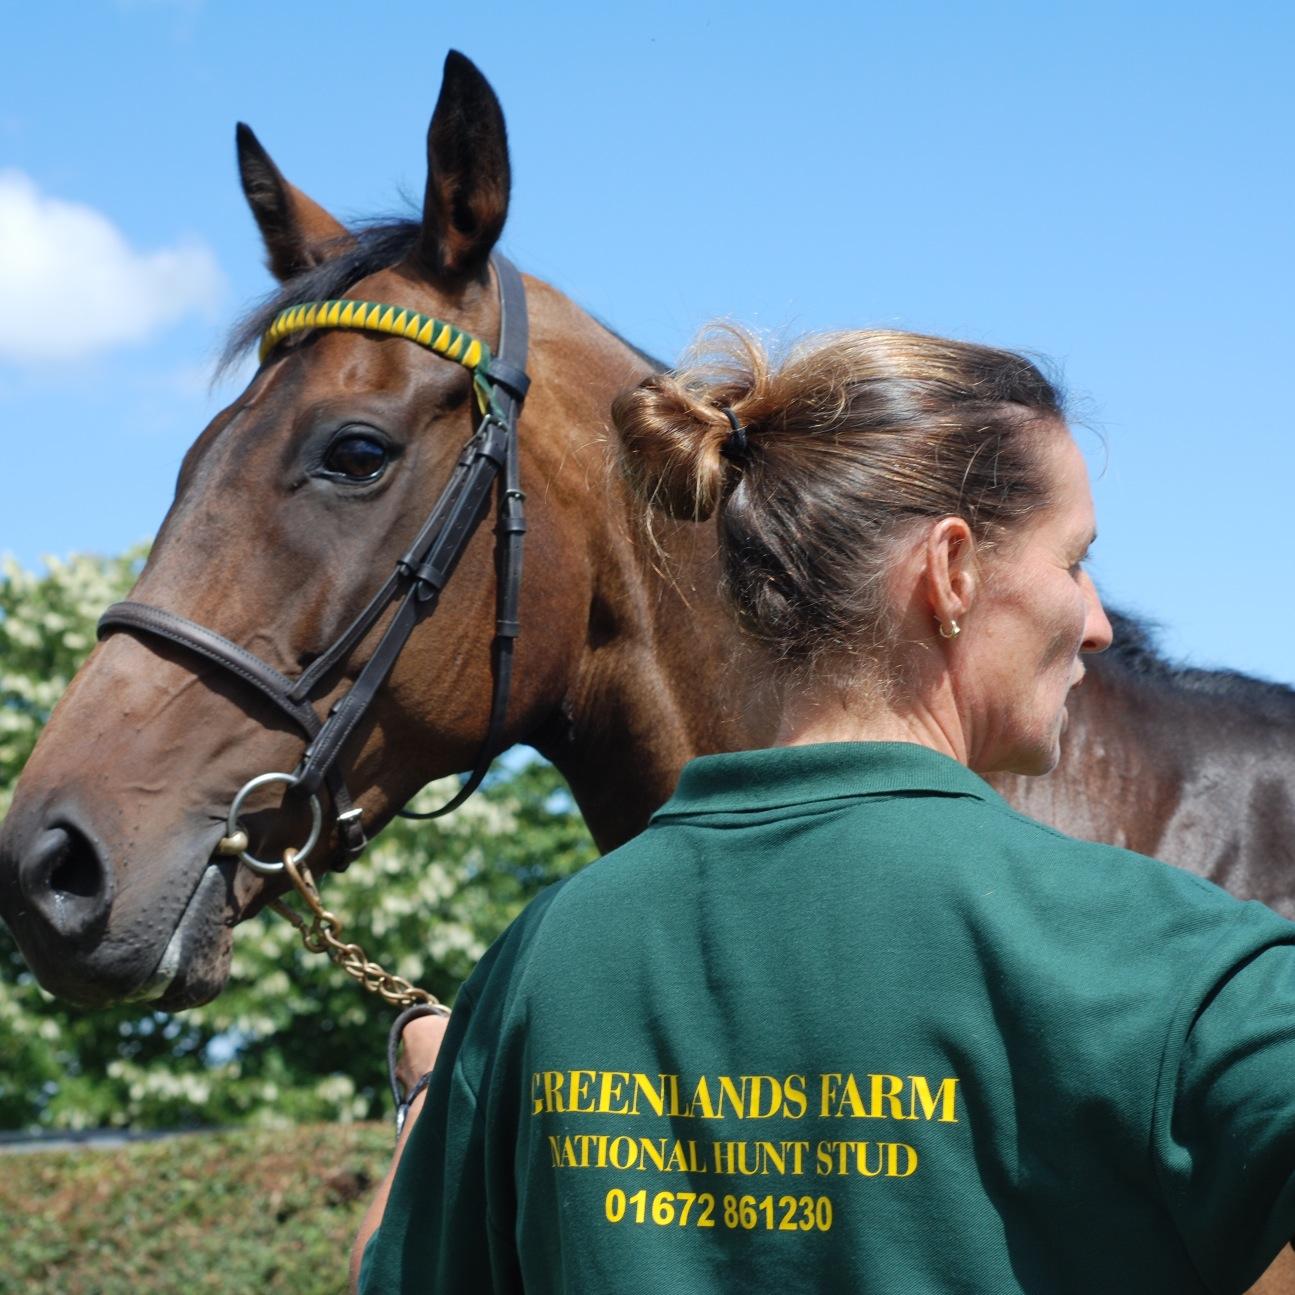 Greenlands Farm, National Hunt Stud, Marlborough, Wiltshire. Breeding winning racehorses since 2009.